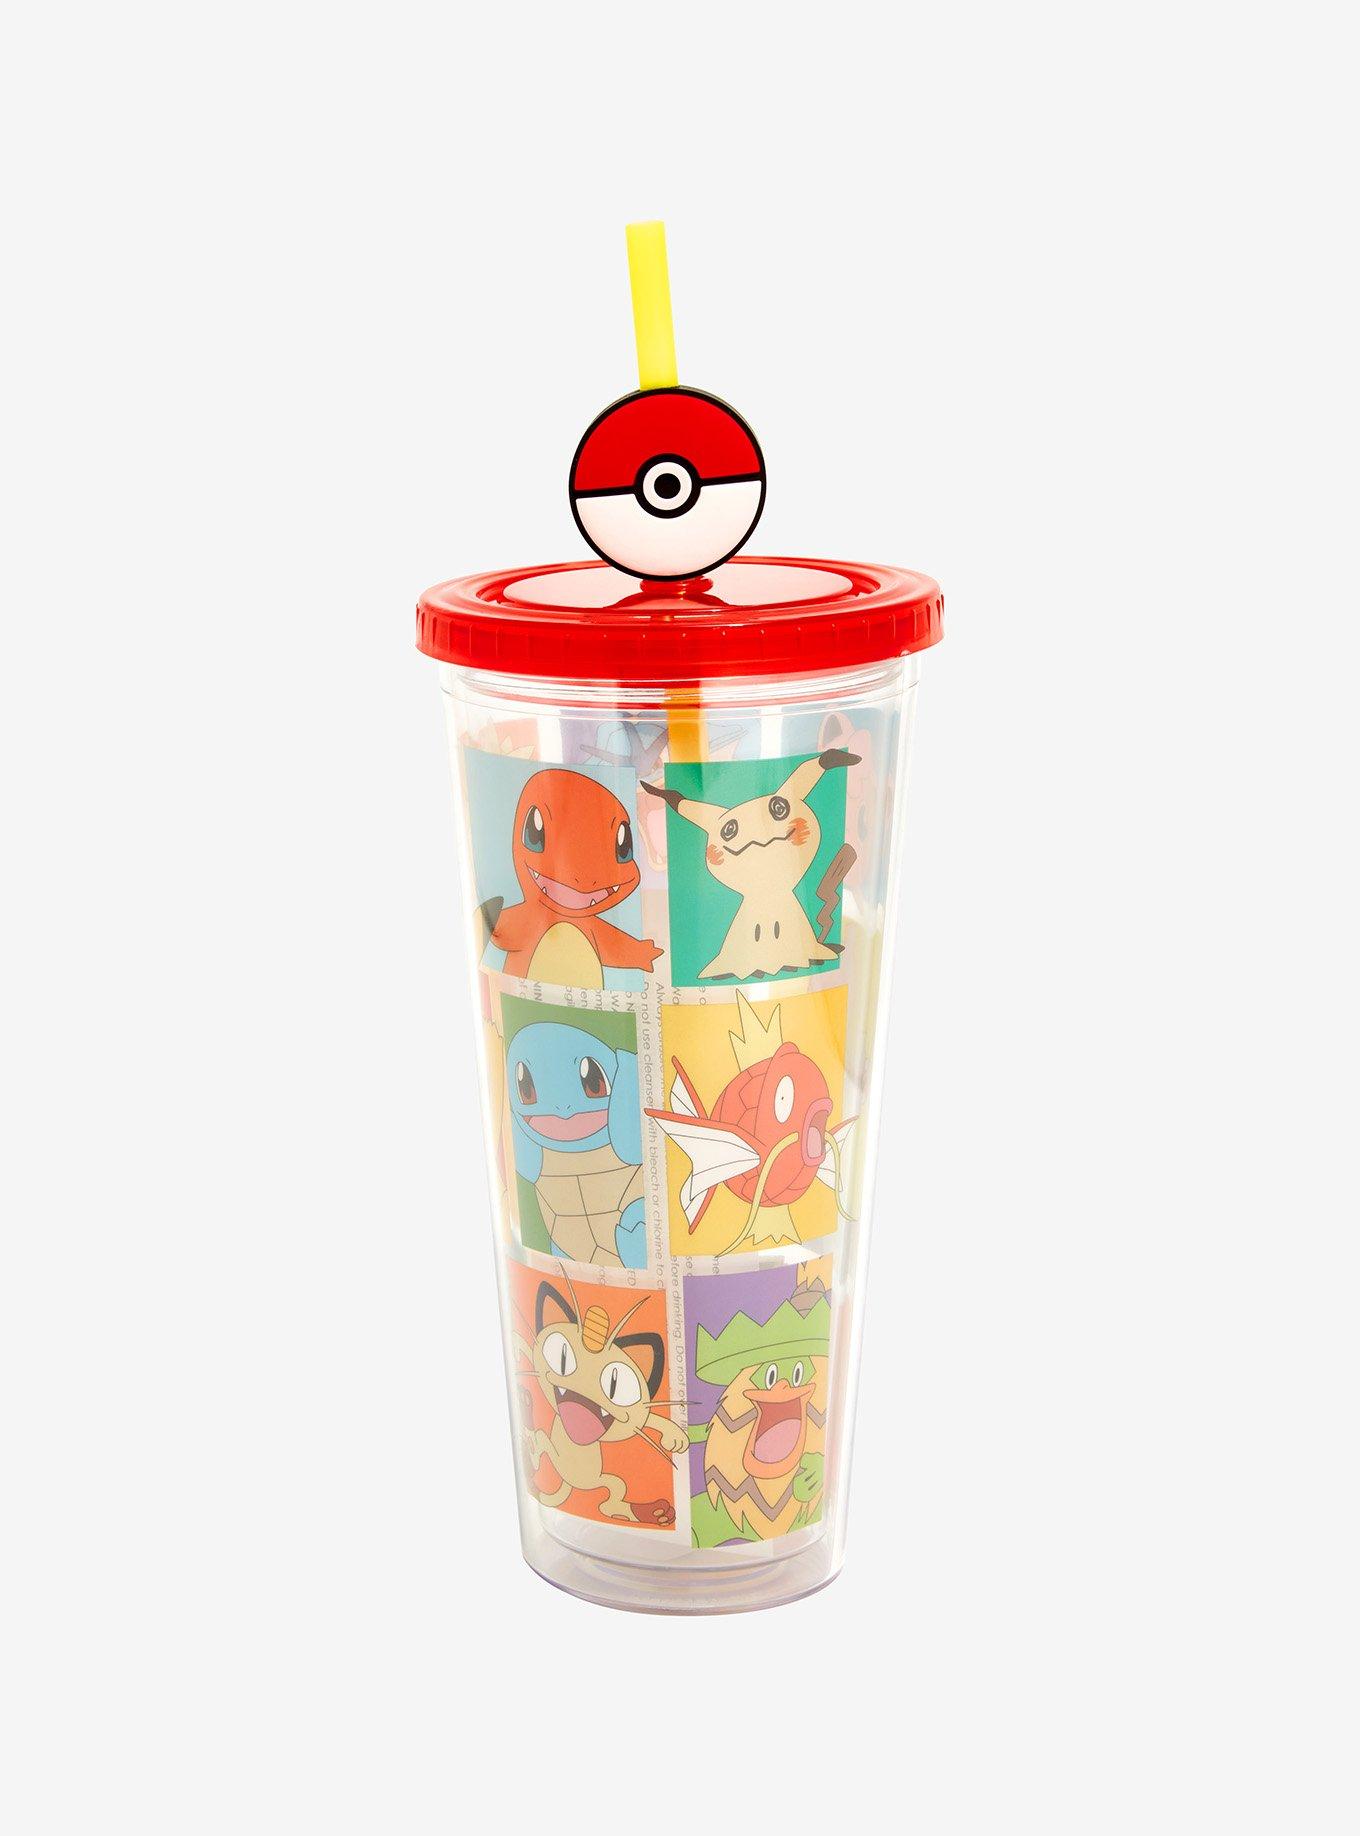 Pokemon inspired Personalized Plastic Tumbler Cup w/ Lid & Straw, Poke